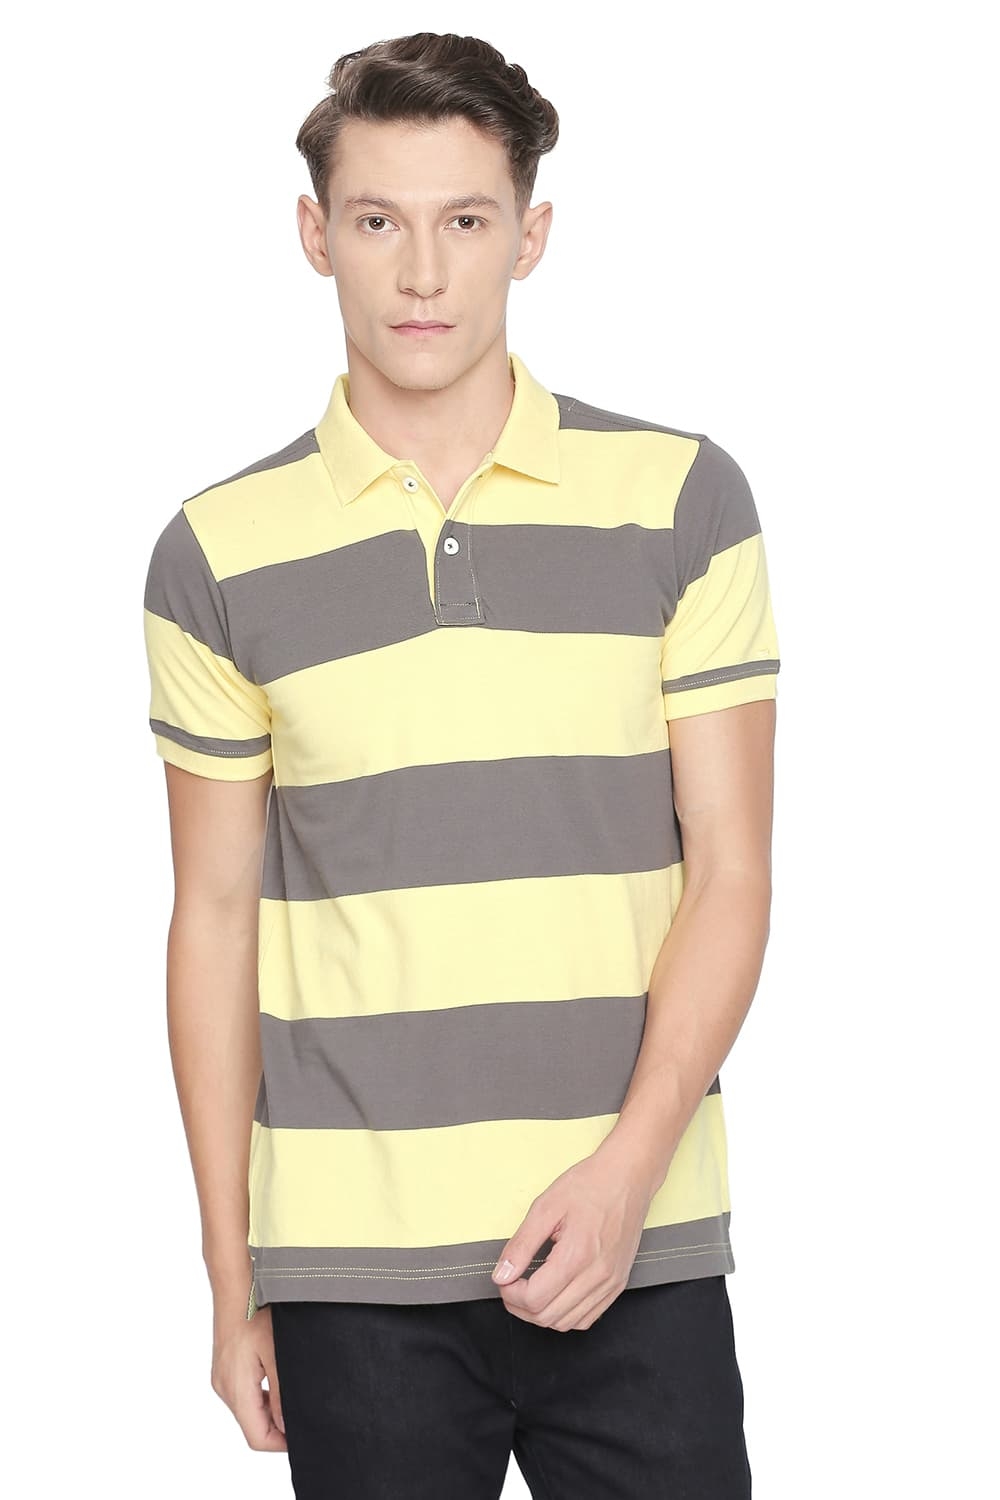 Basics | Basics Muscle Fit Lemon Verbena Stripe Polo T Shirt